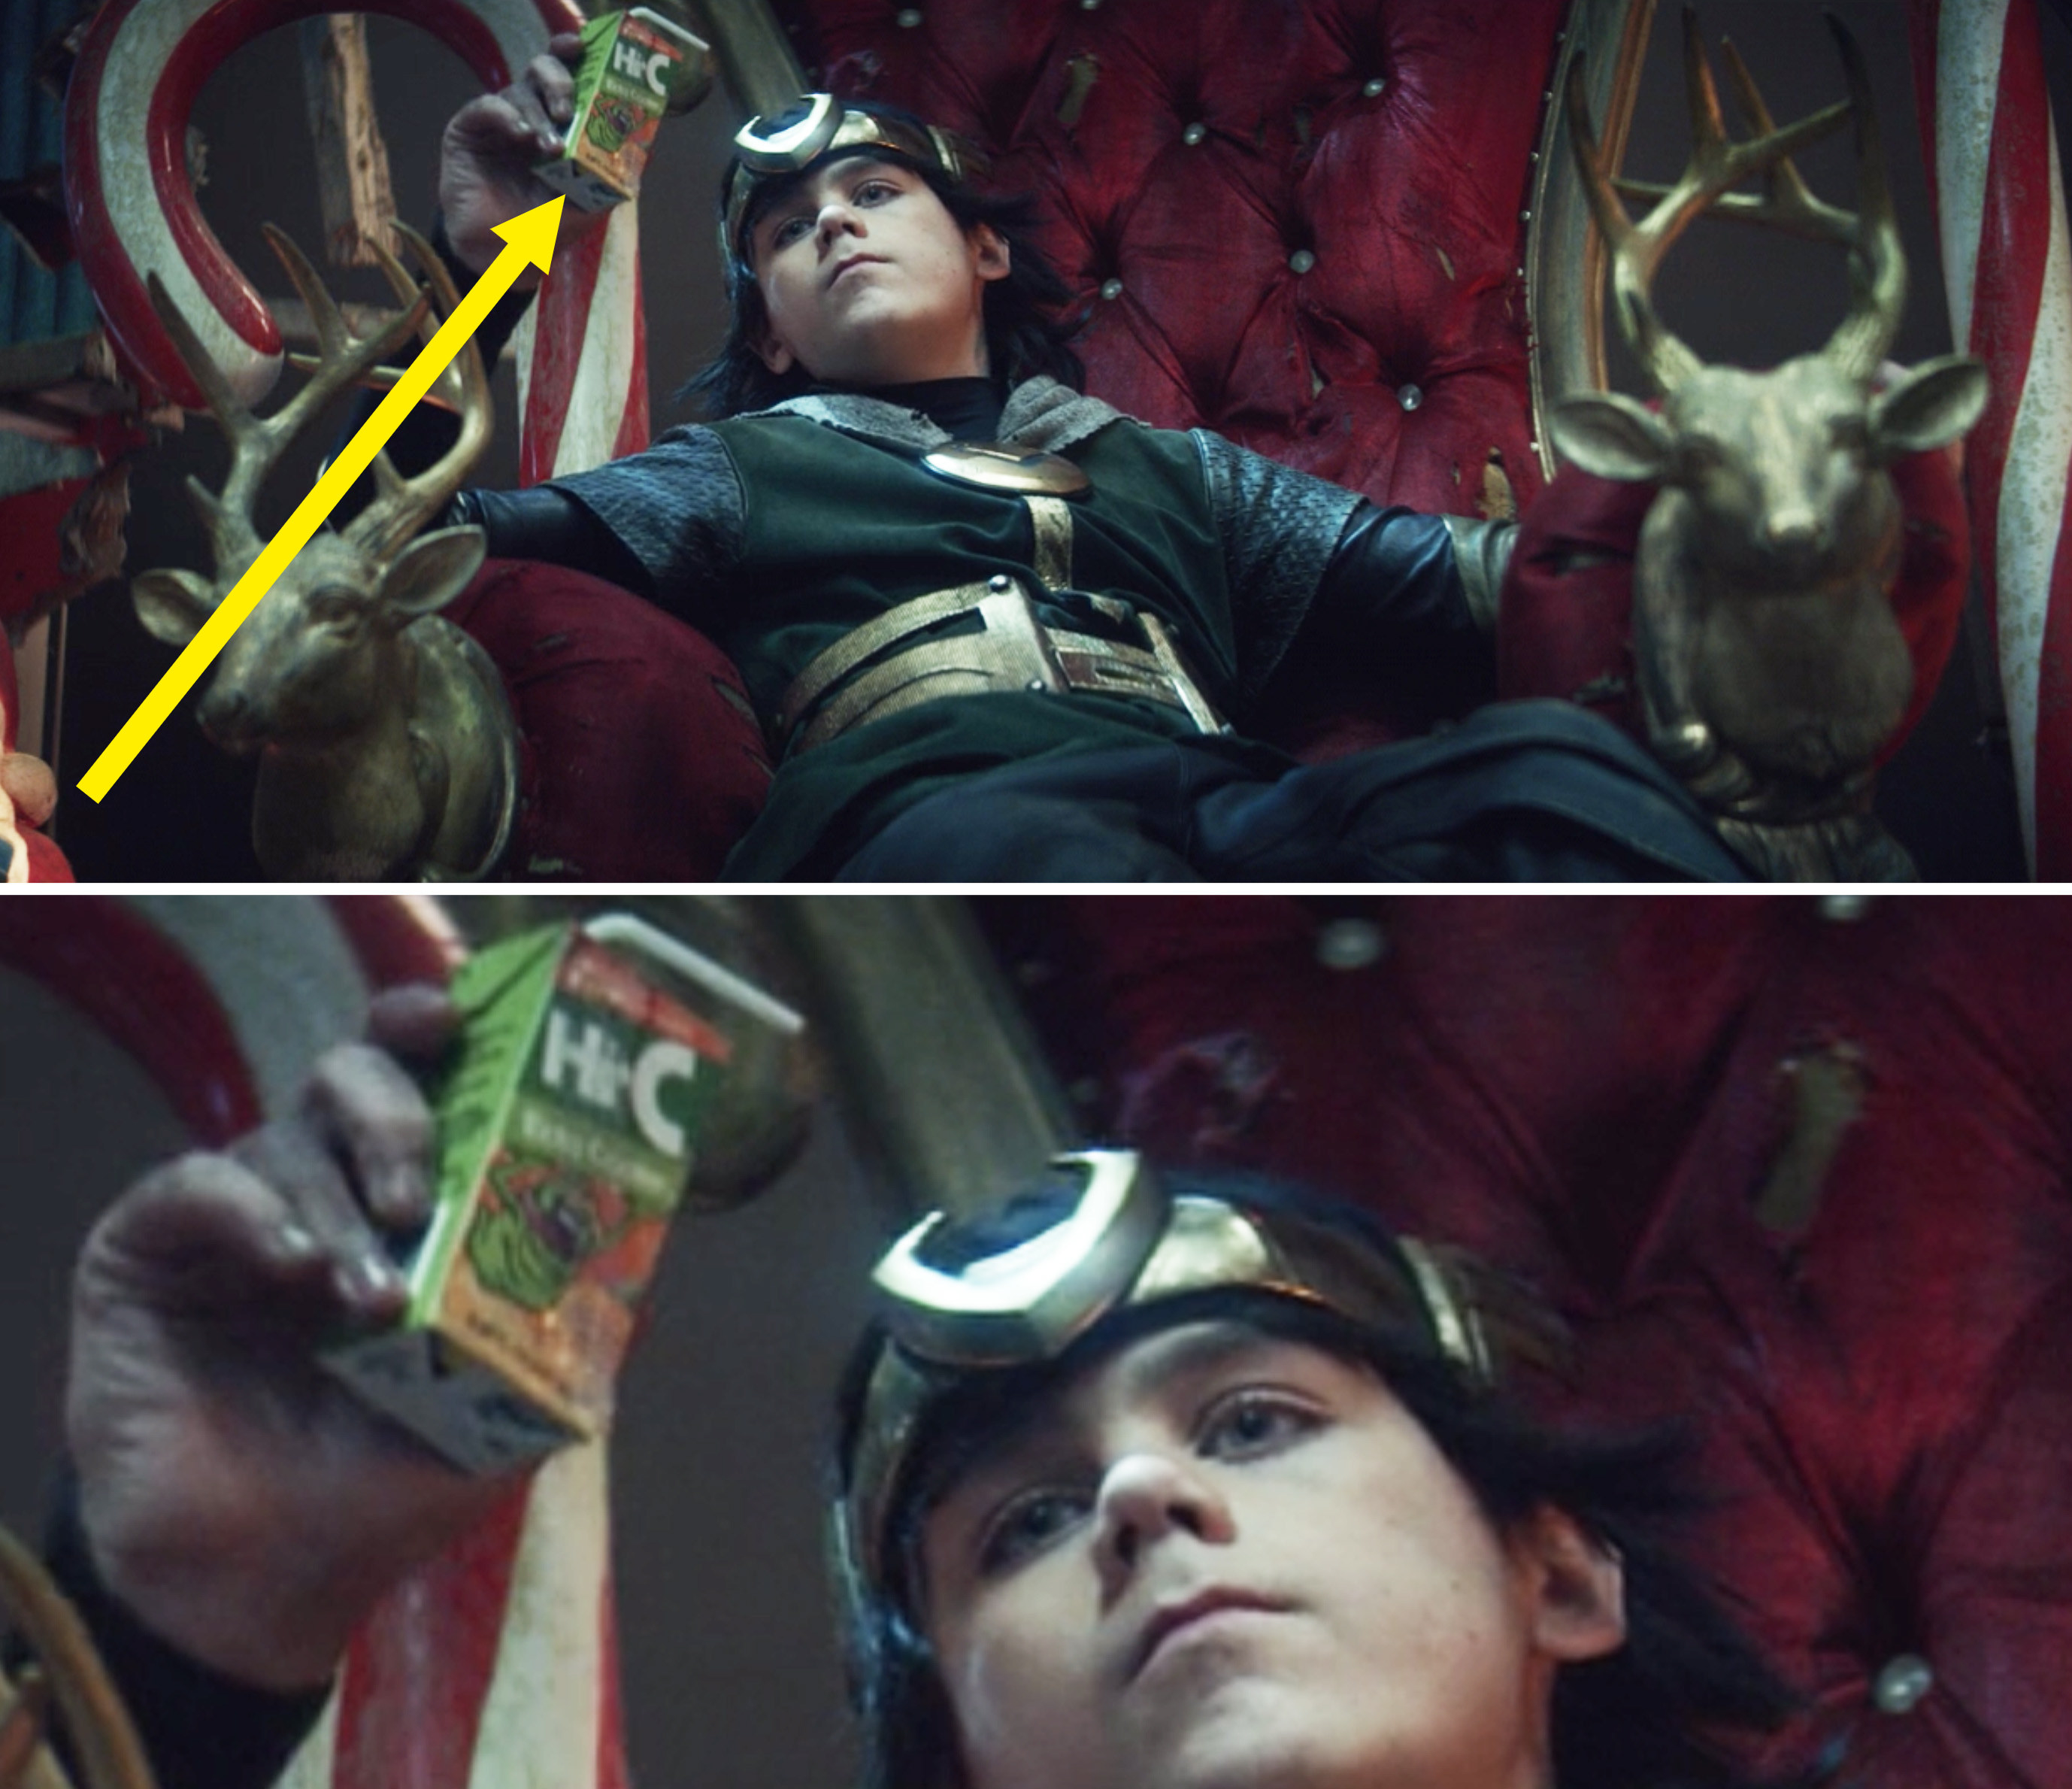 Kid Loki holding up a Hi-C juice box